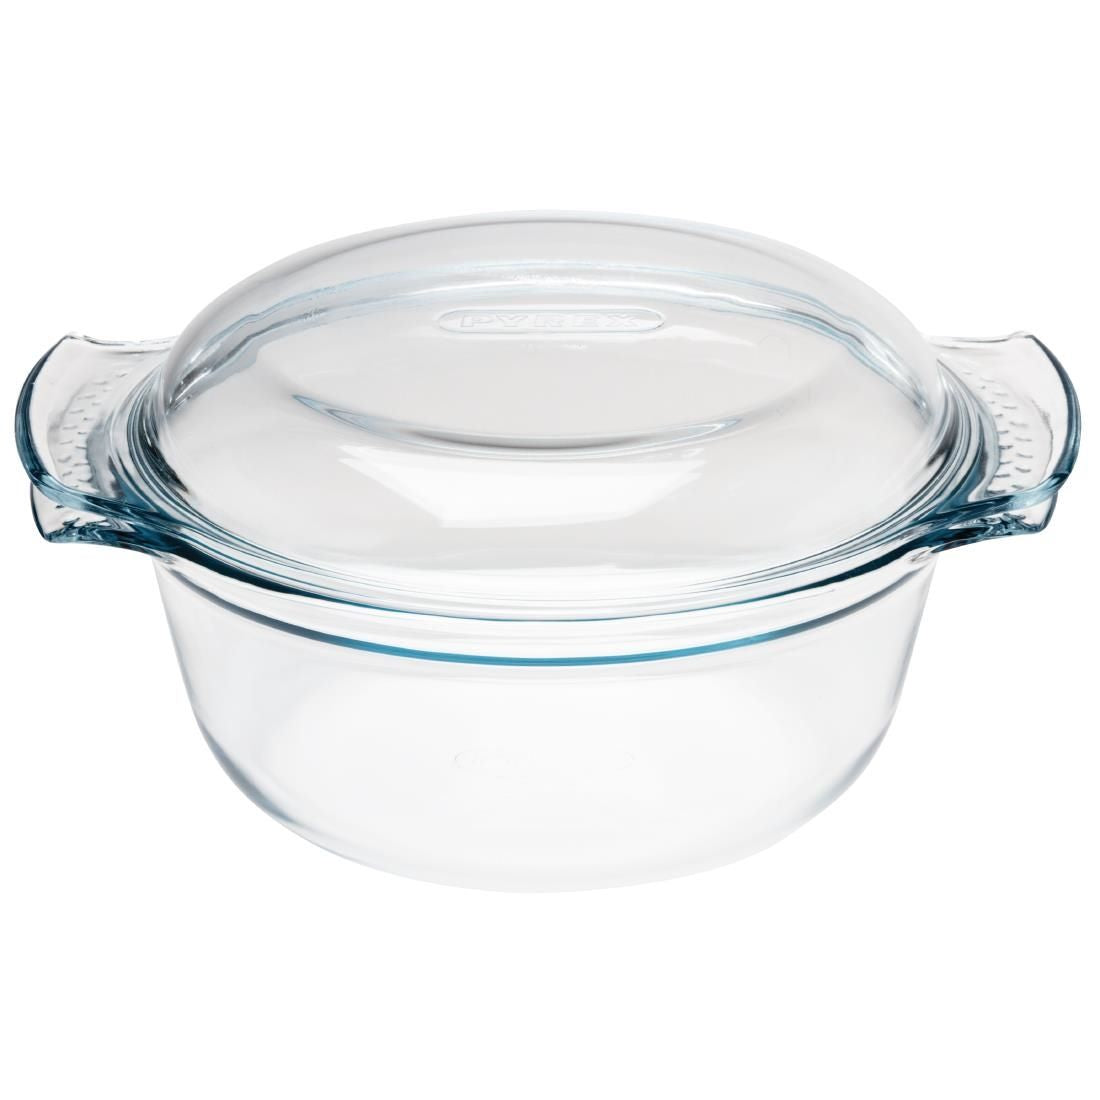 Pyrex Round Glass Casserole Dish 1.5Ltr - P588